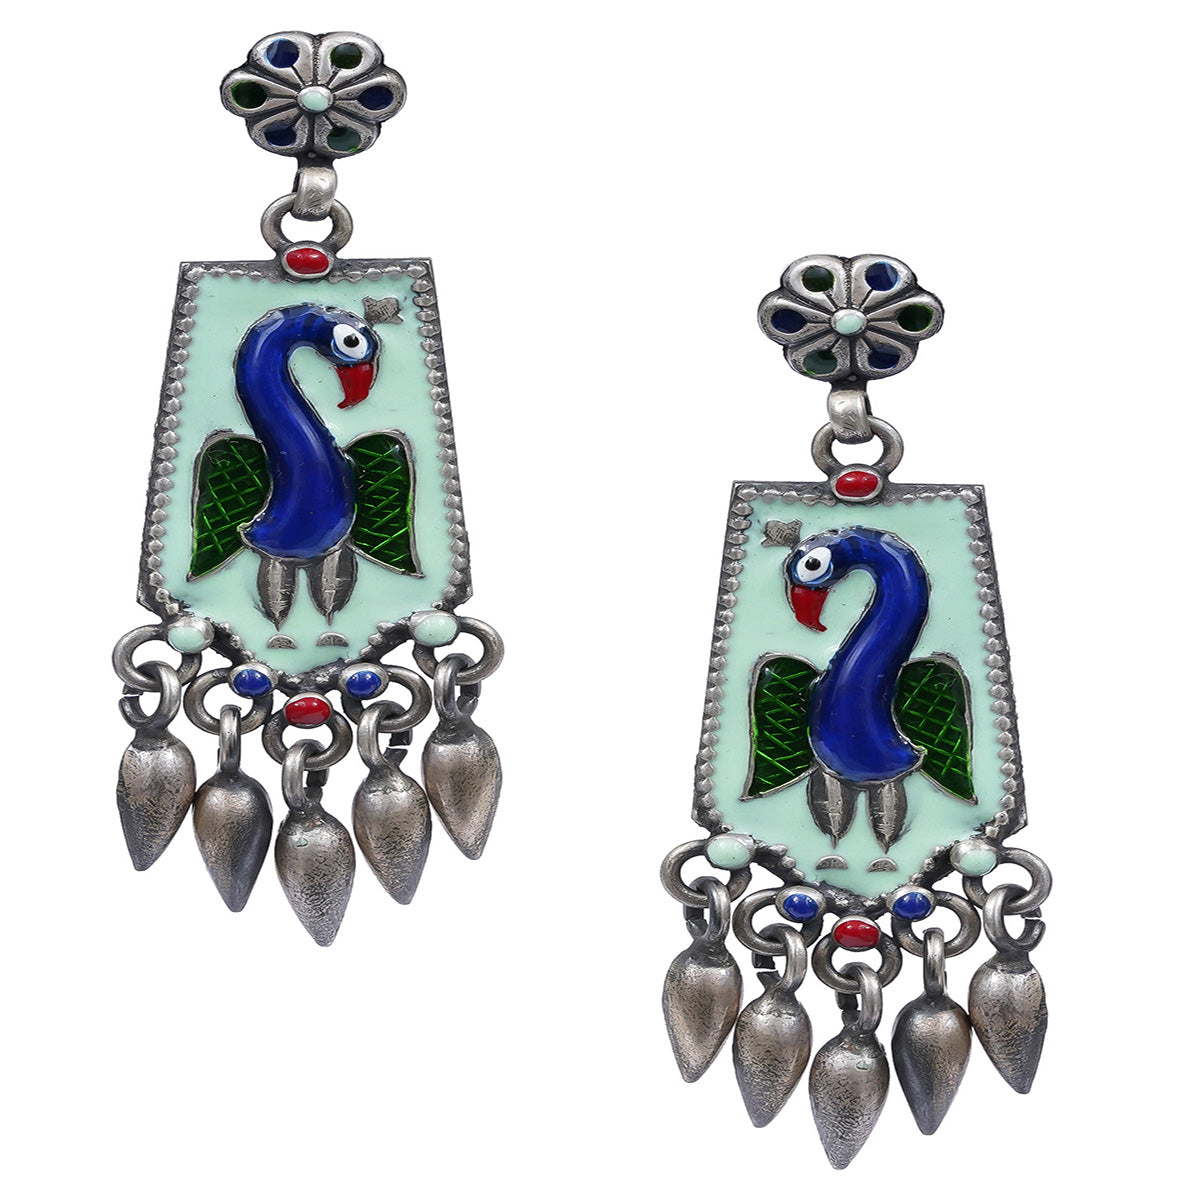 Peacock Handcrafted Enamel Earring With Hangings - UMANG